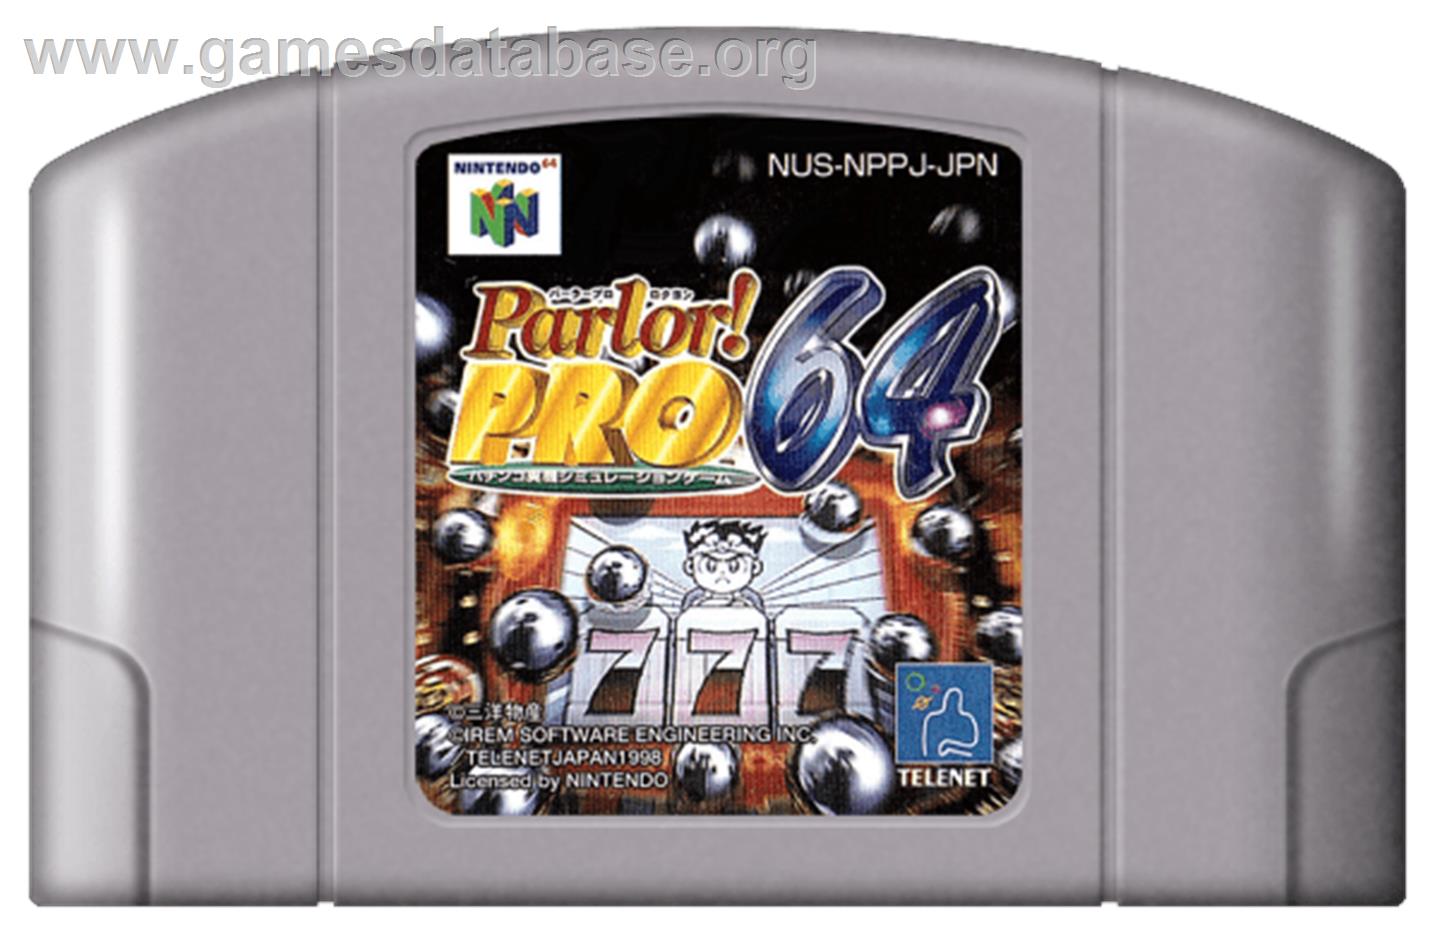 Parlor! Pro 64: Pachinko Jikki Simulation - Nintendo N64 - Artwork - Cartridge